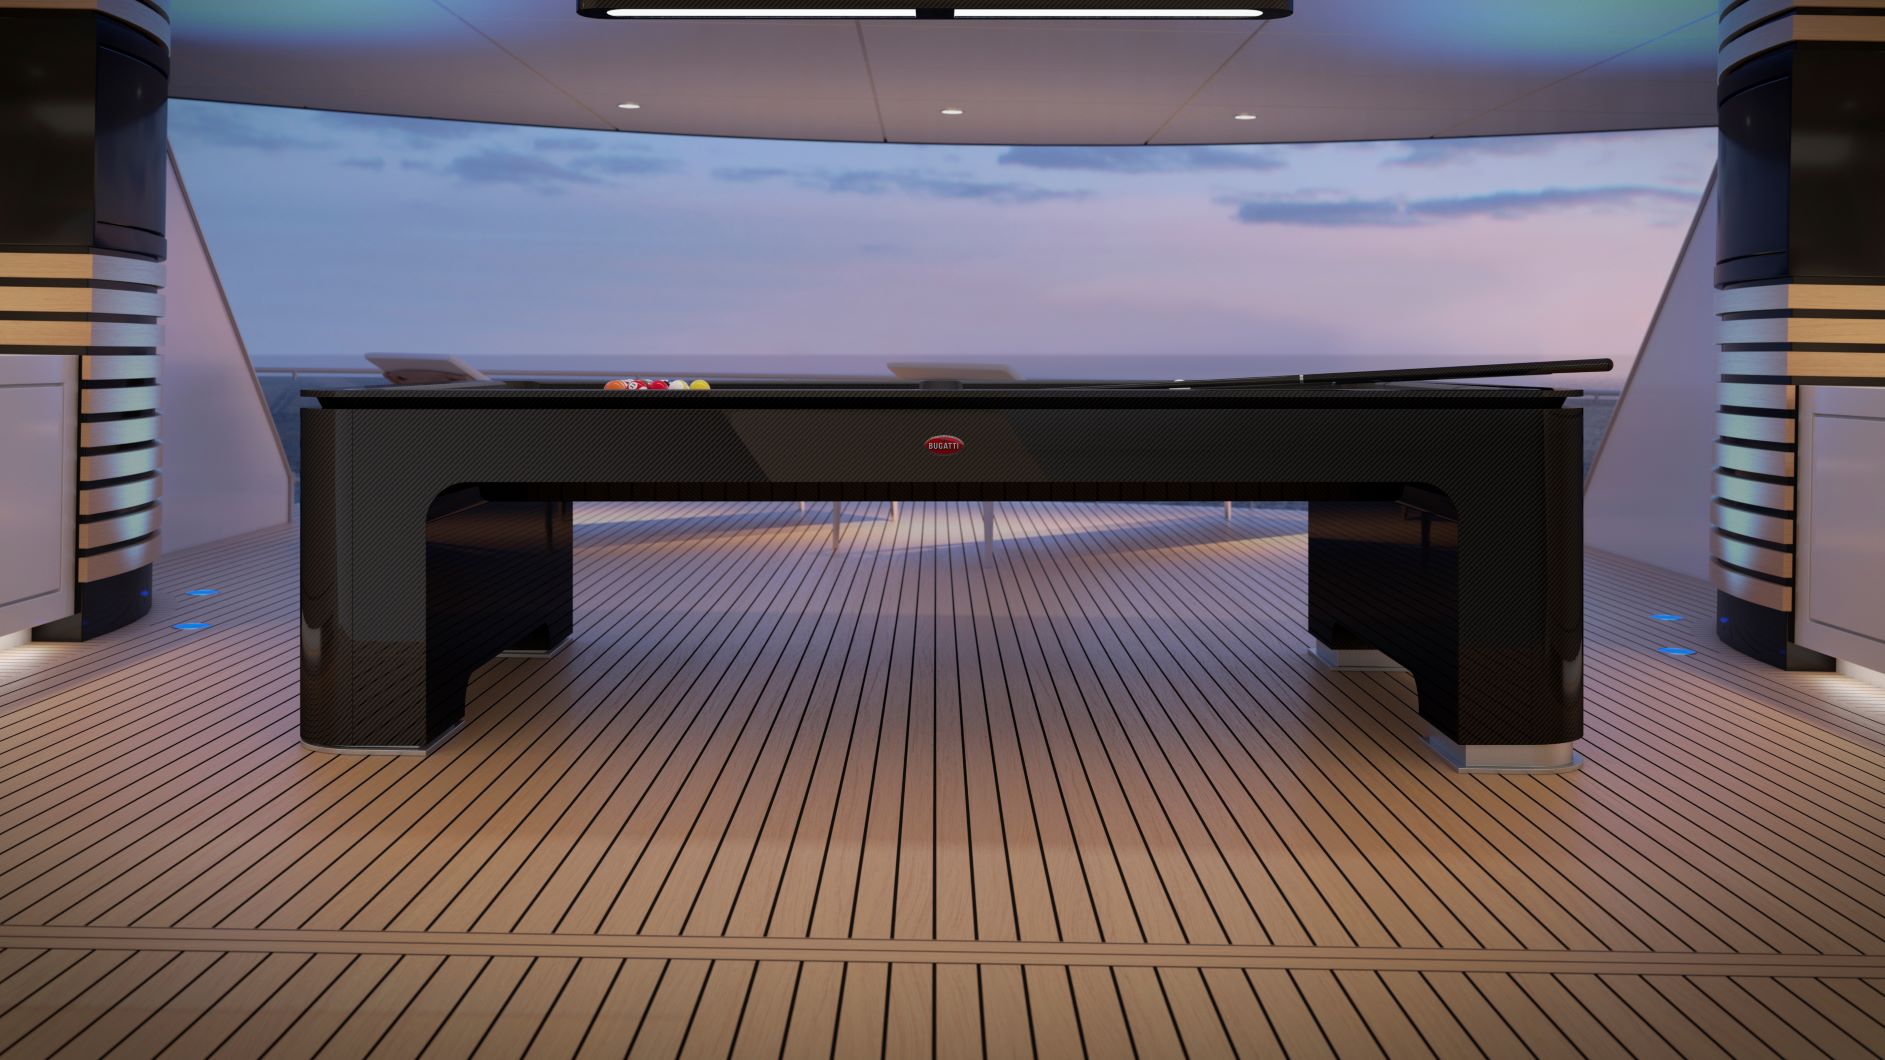 Bugatti's pool table on a yacht